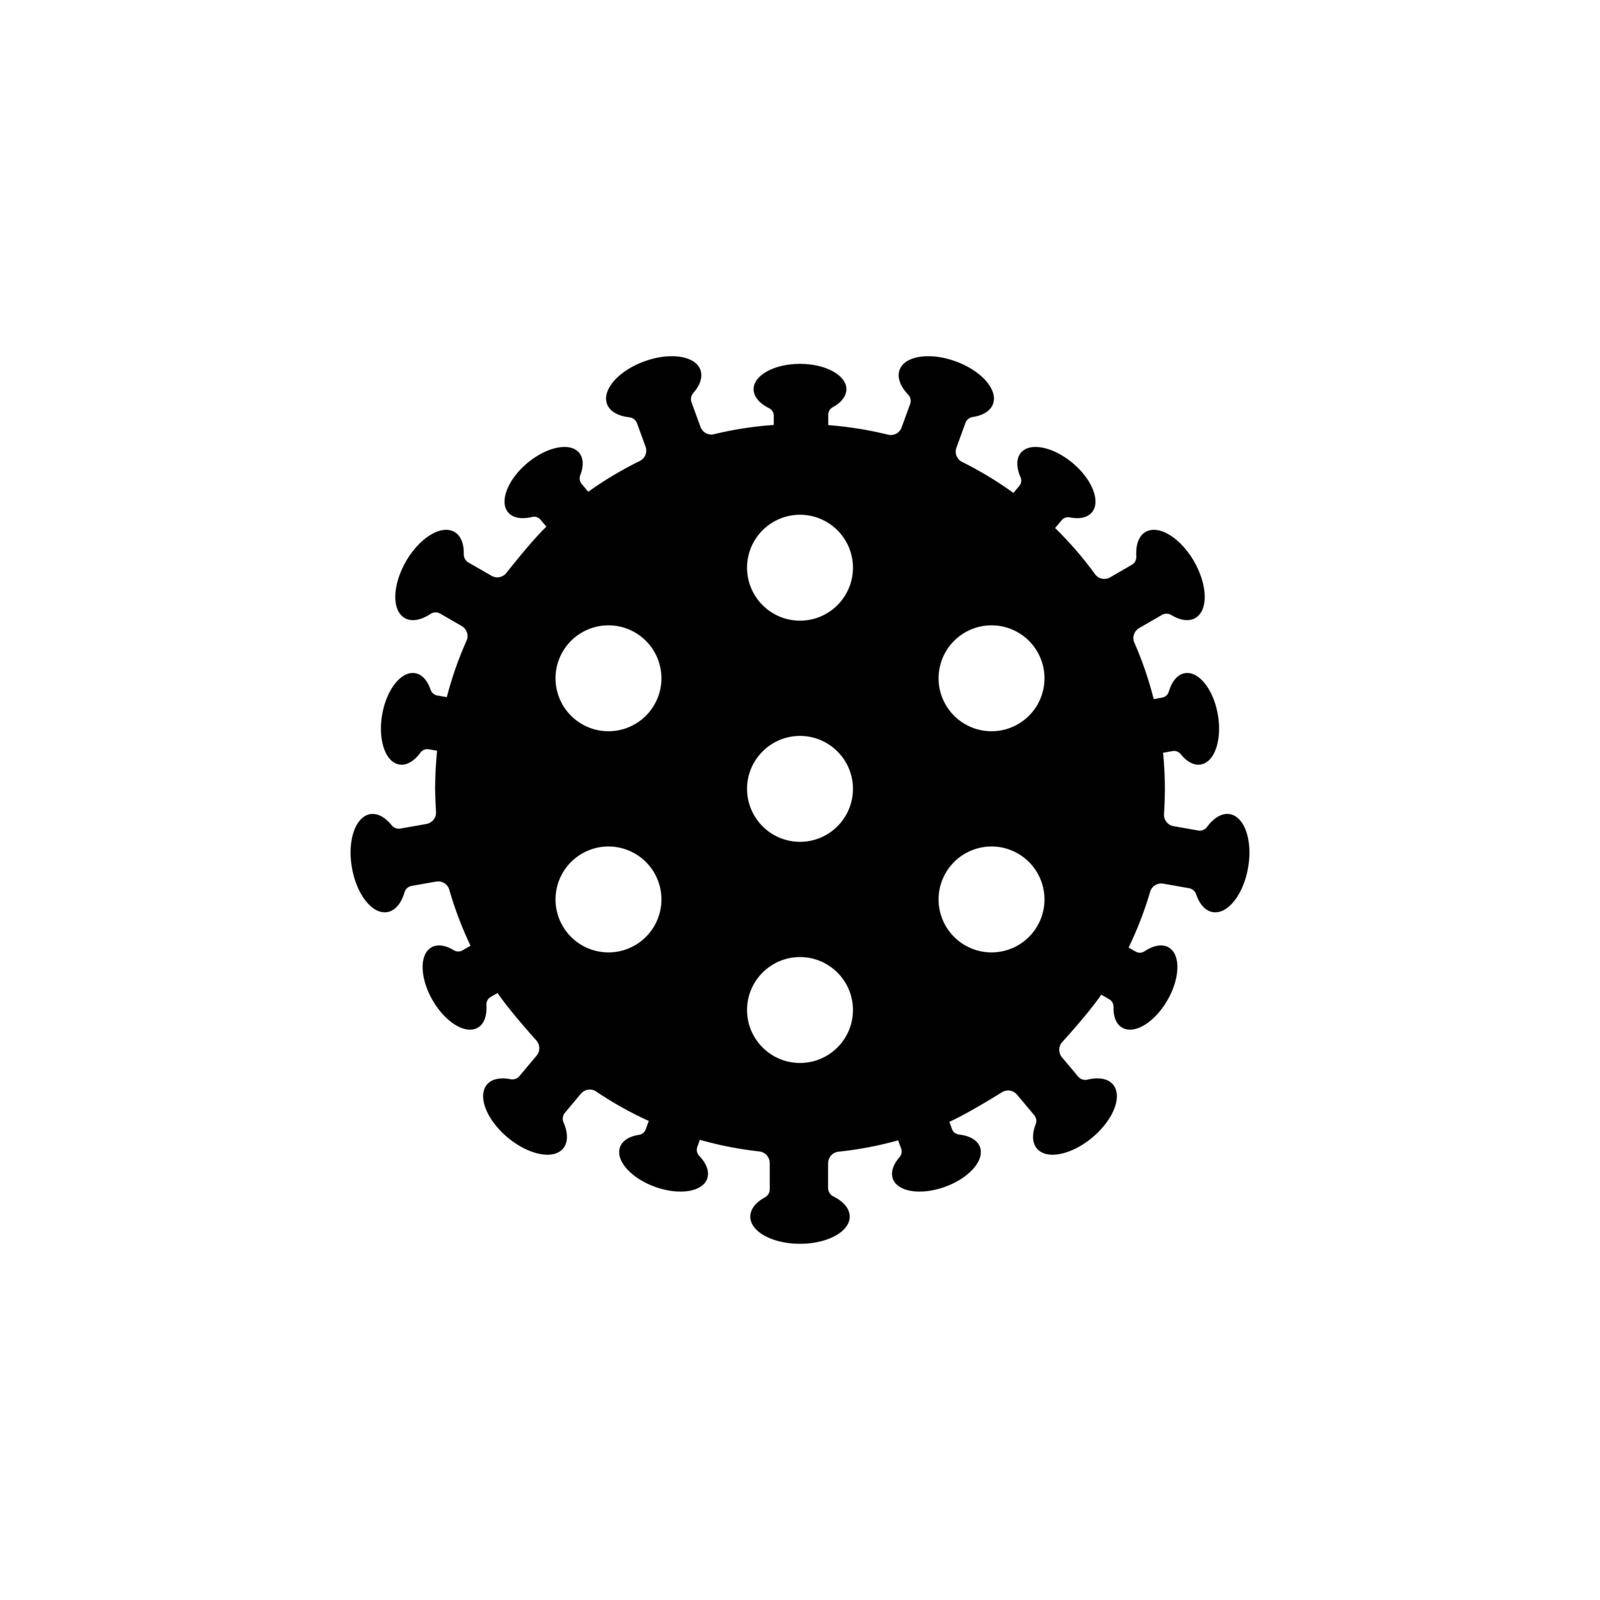 Coronavirus Bacteria 2019-nCoV vector glyph icon by nosik